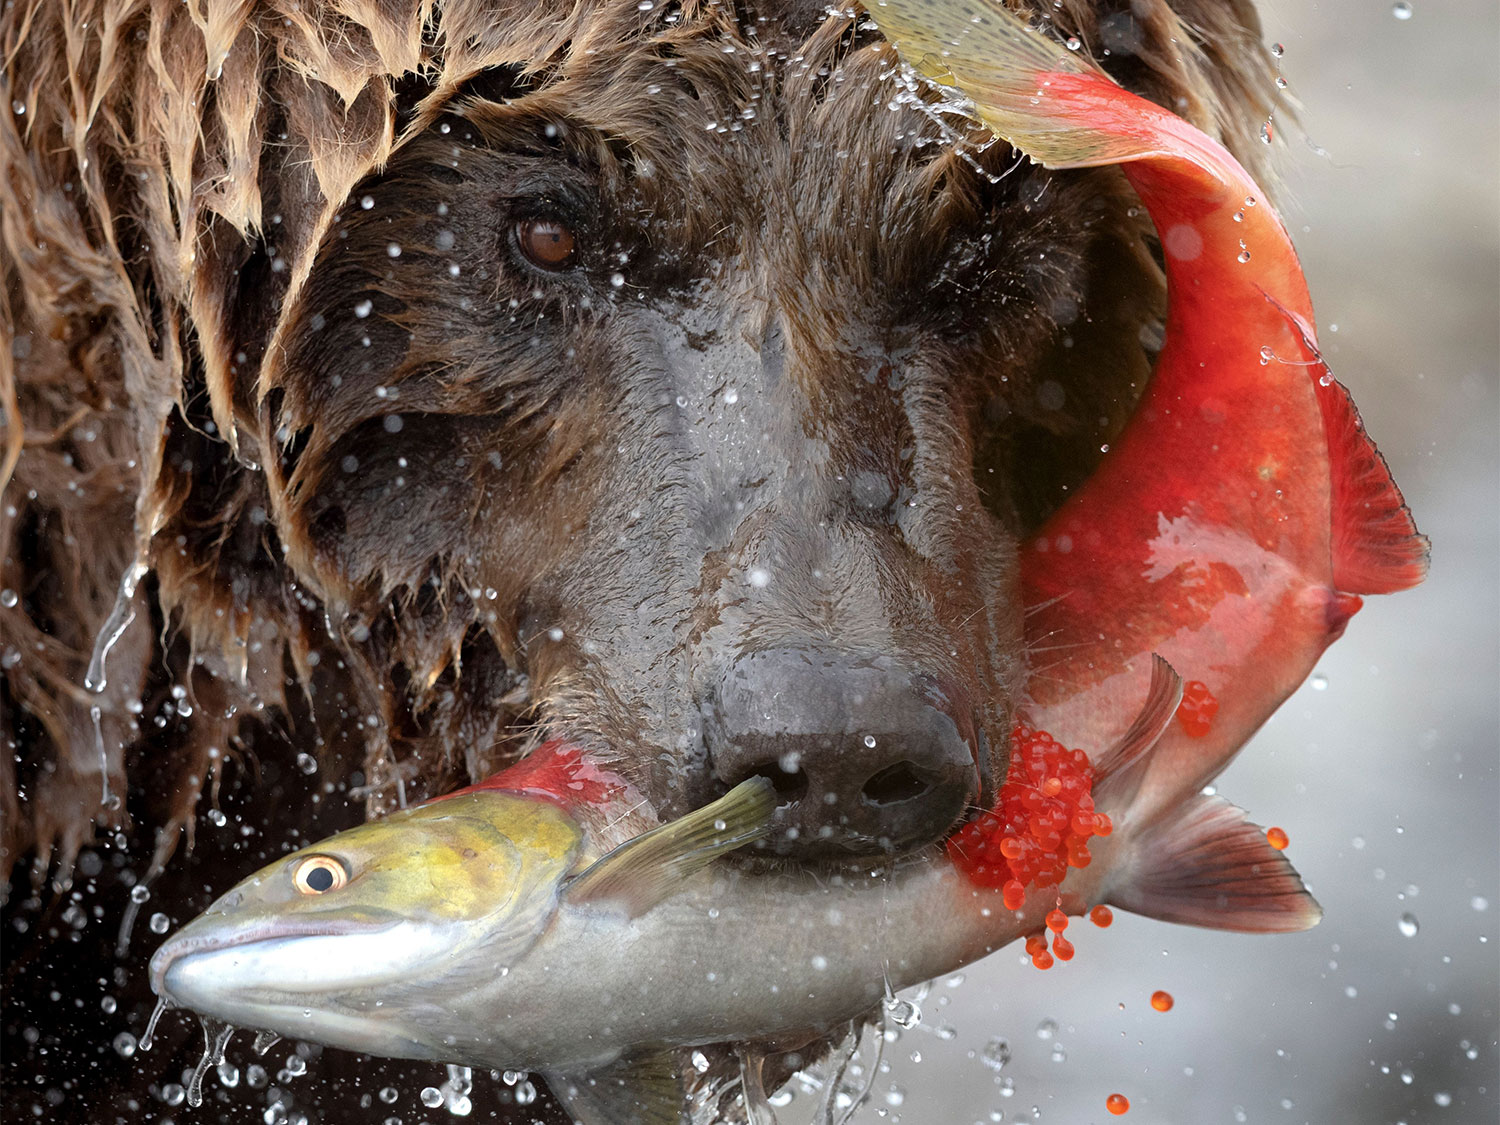 A bear biting into a salmon.